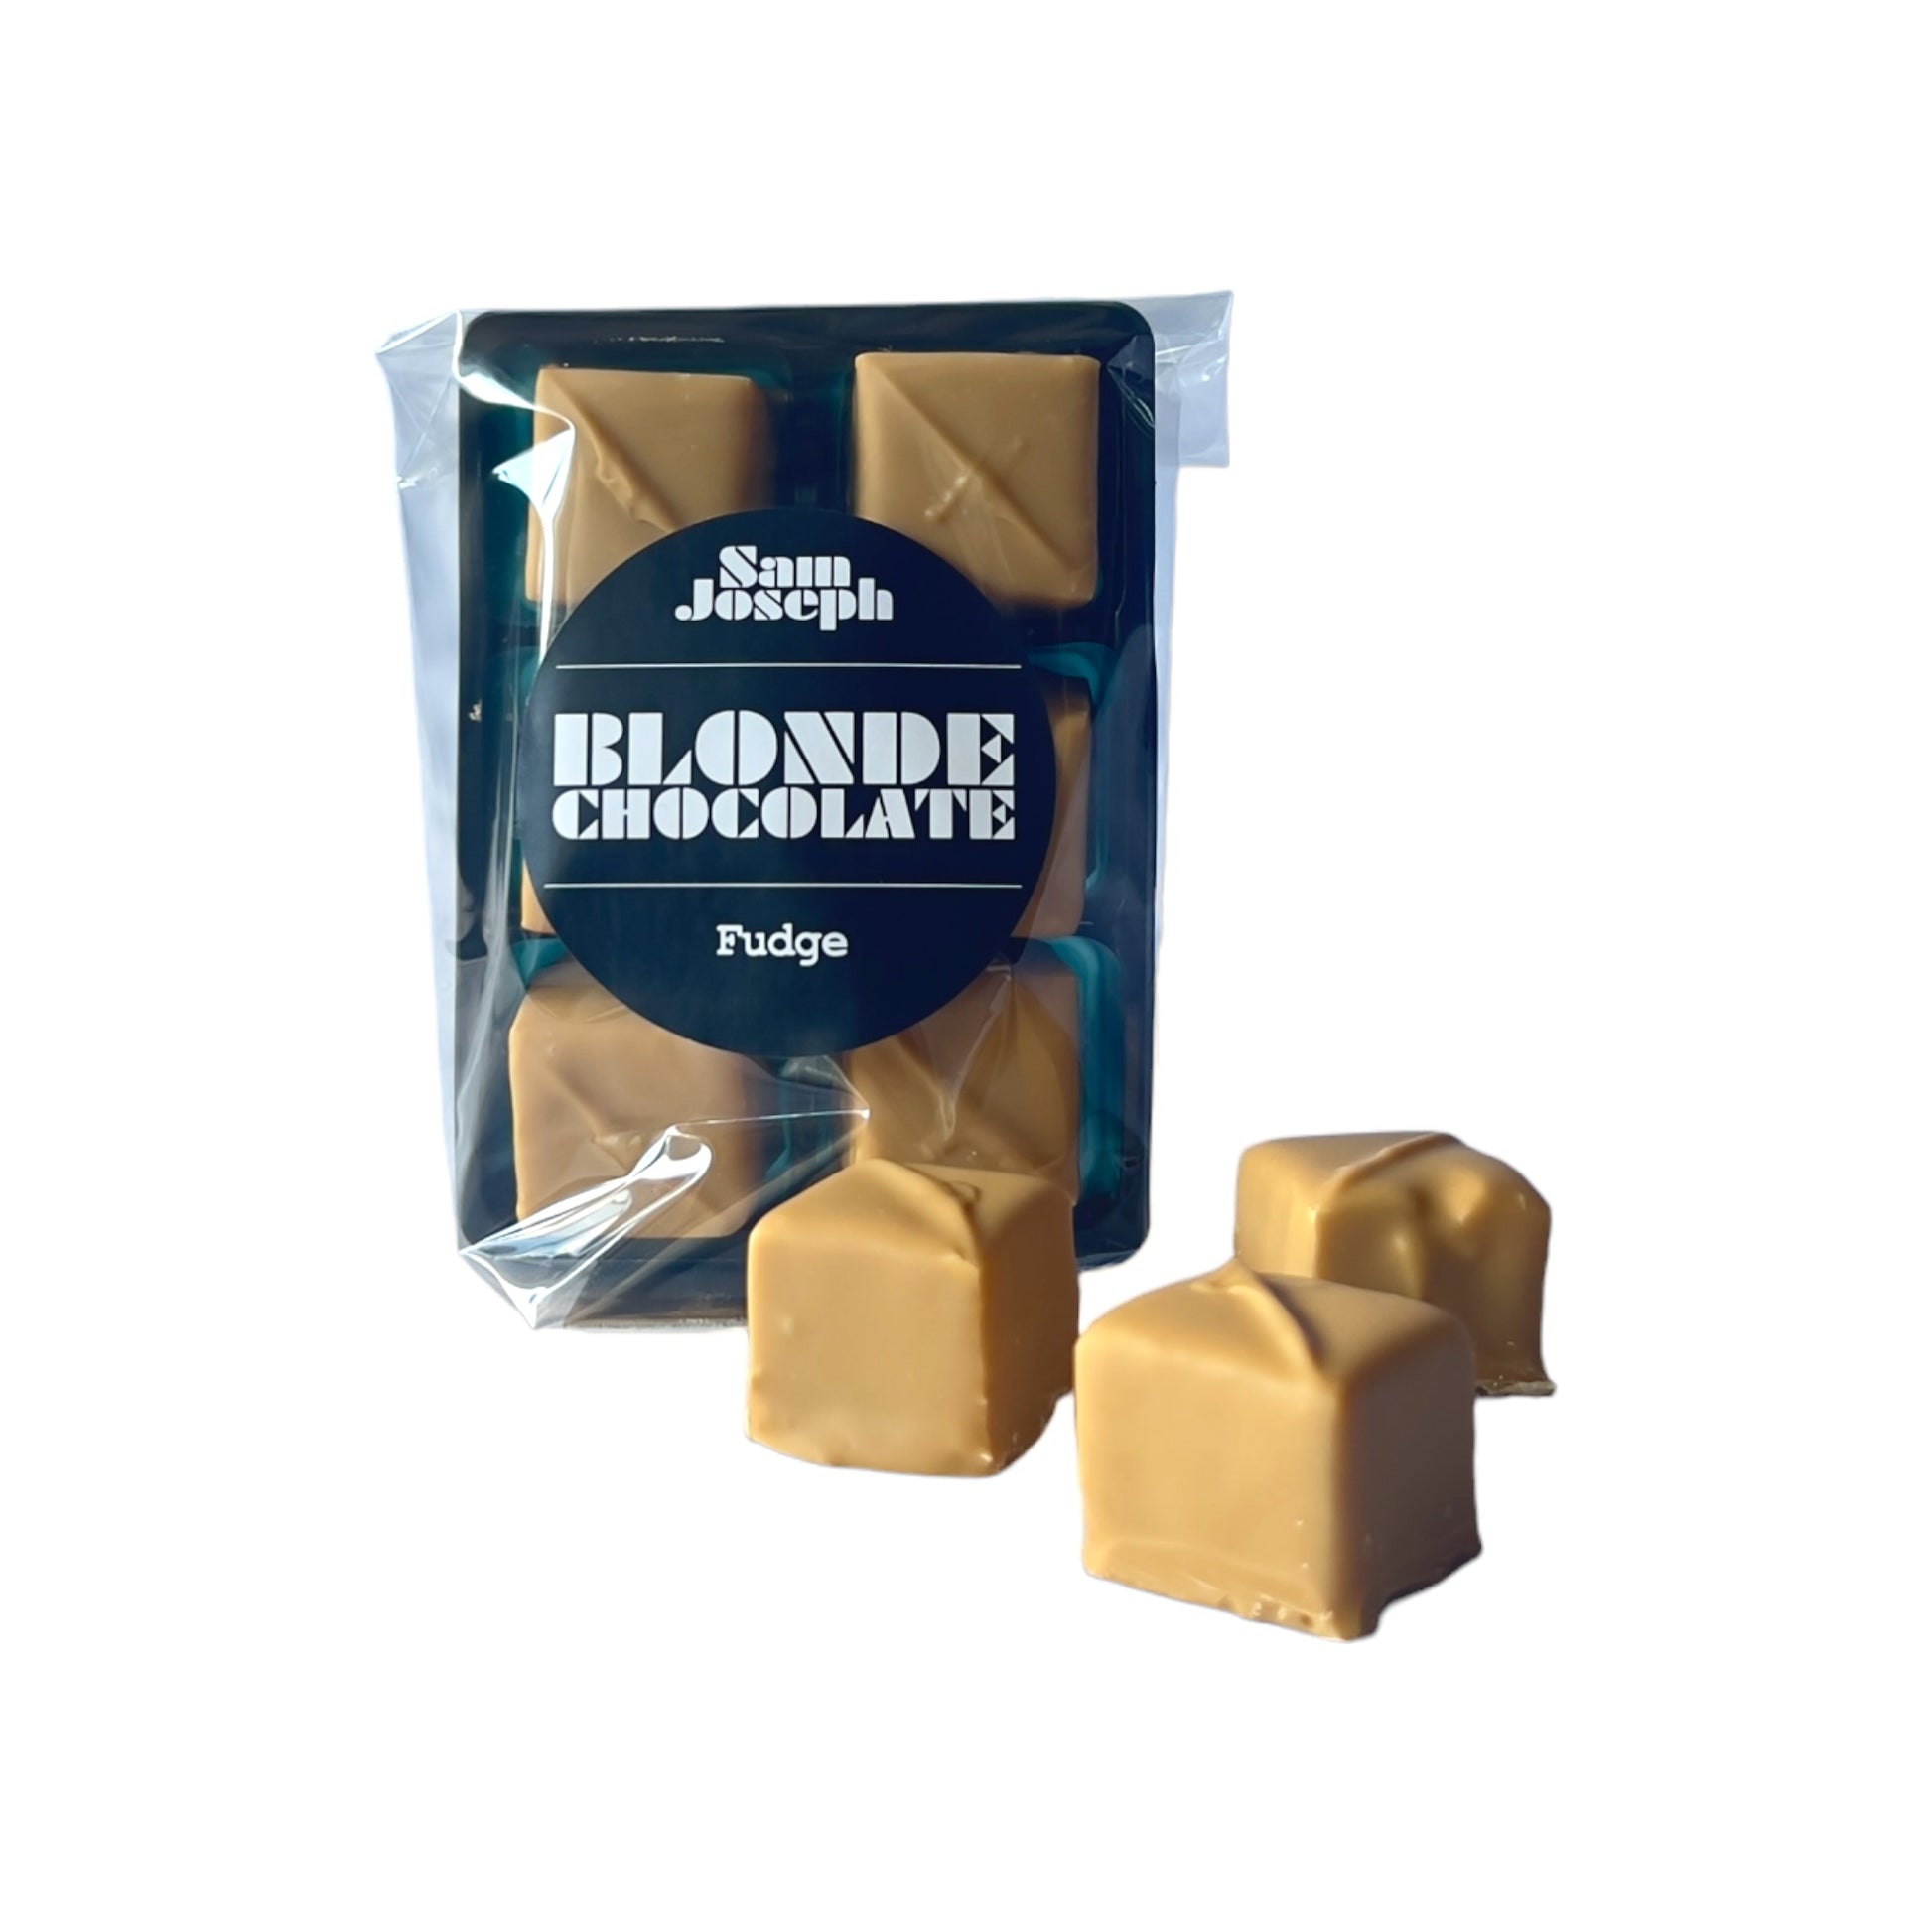 Blonde chocolate fudge - Sam Joseph chocolates